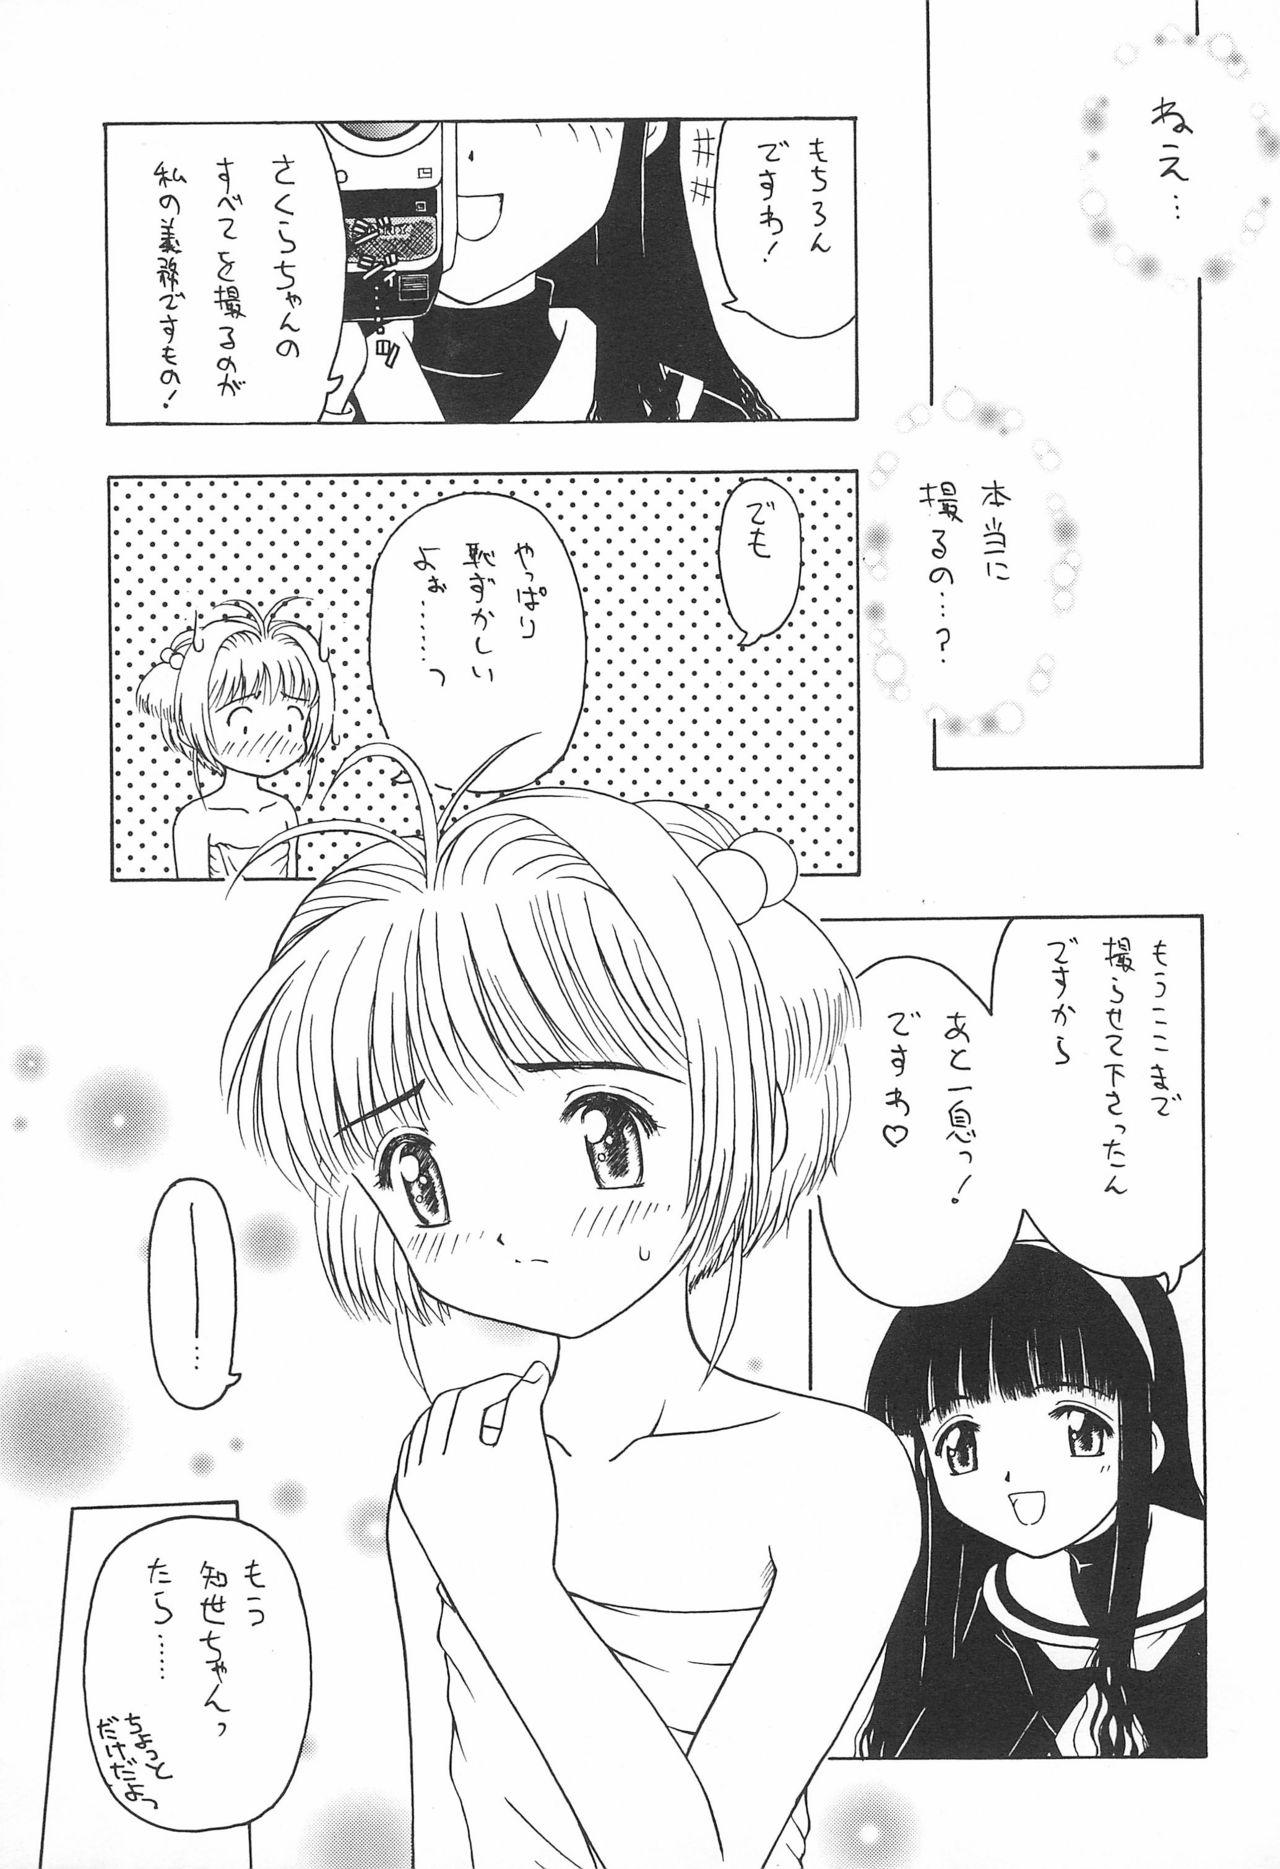 Girlfriend Sakura to Tomoyo INTERCOURSE 1 - Cardcaptor sakura Behind - Page 5